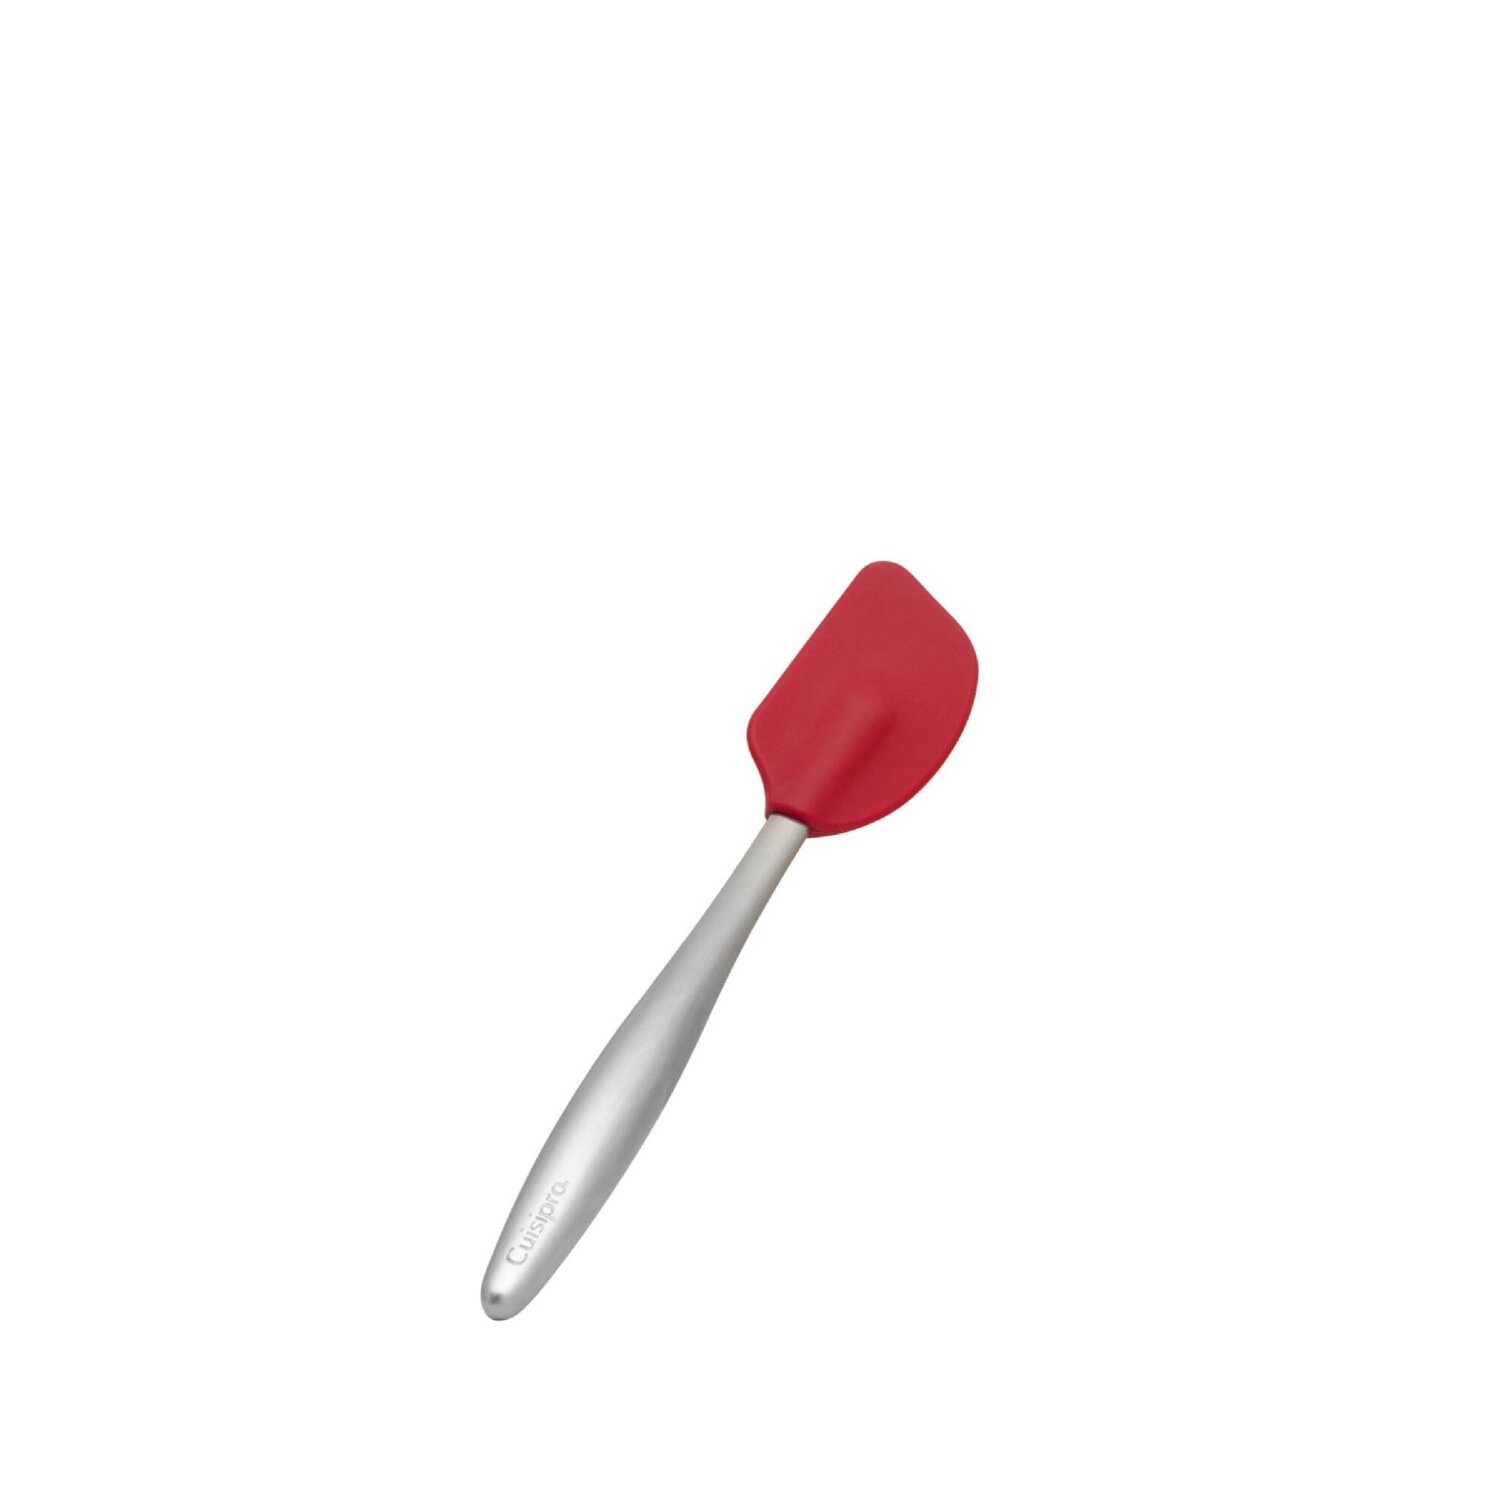 CUISIPRO 'piccolo tools' mini pannenlikker 20cm rvs/silicone rood  PROMO 15,95 -20%